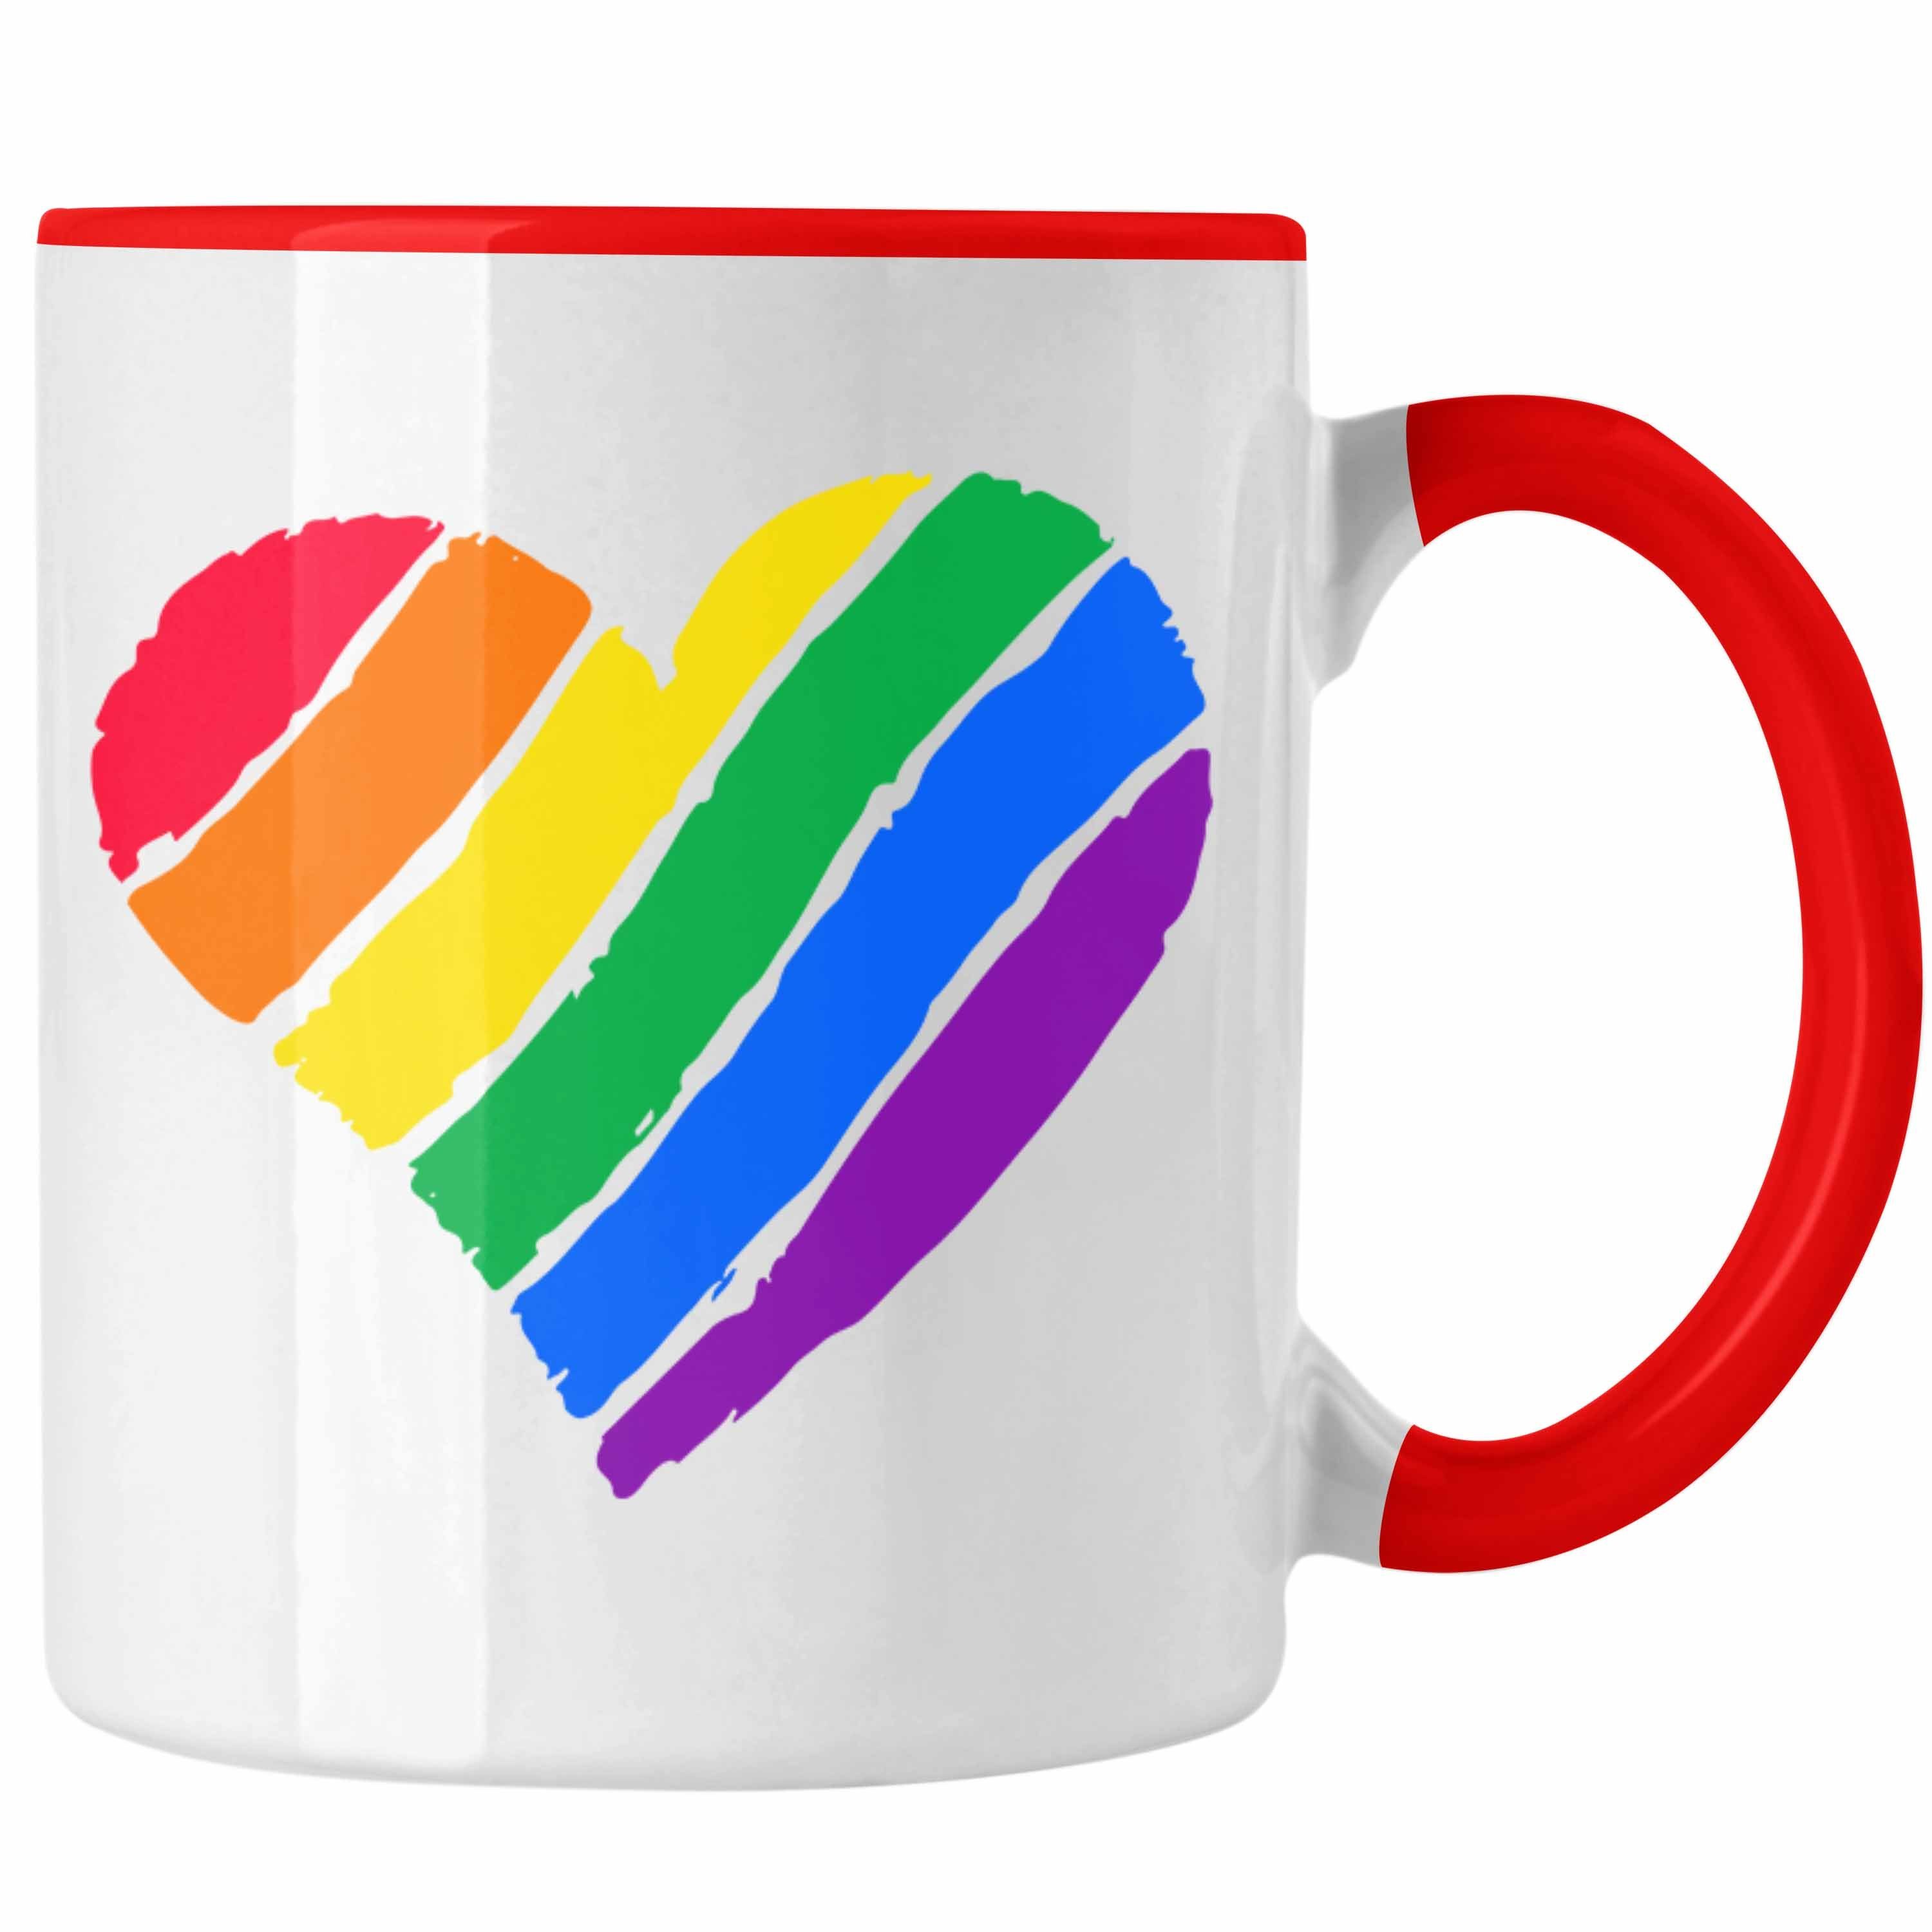 Trendation Tasse Trendation - Regenbogen Tasse Geschenk LGBT Schwule Lesben Transgender Grafik Pride Herz Rot